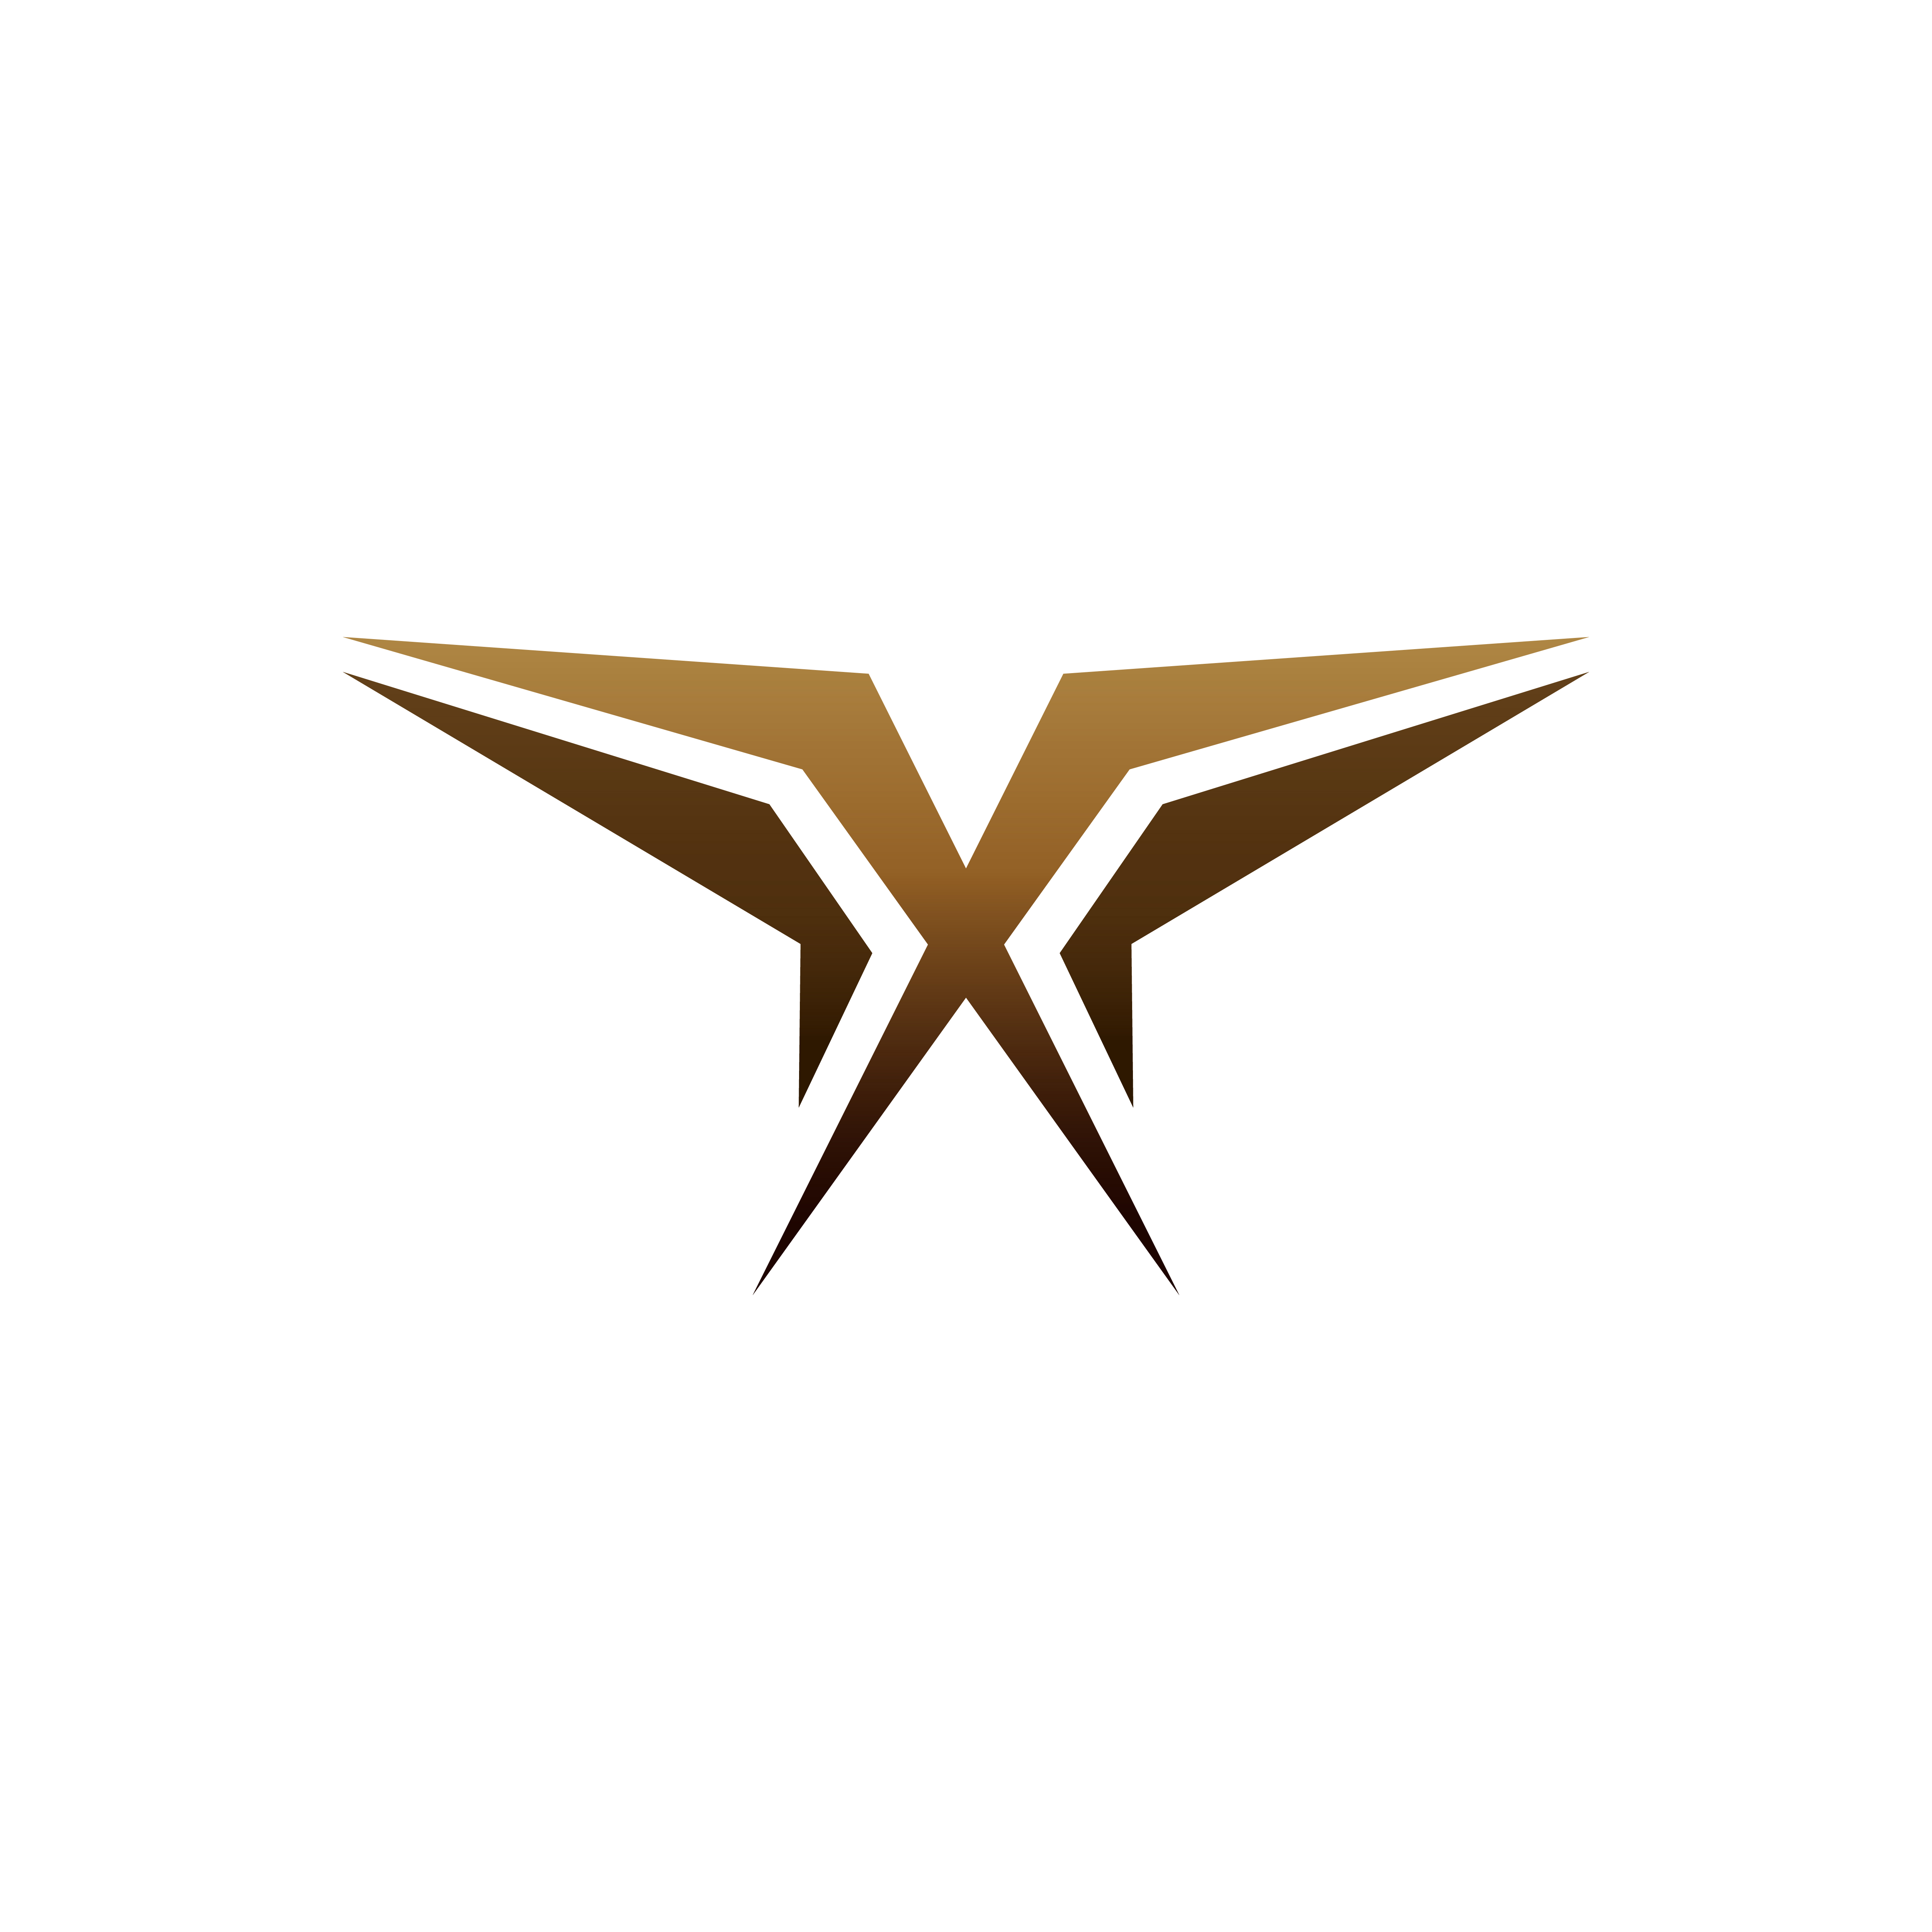 luxury letter x logo design concept template - Download ...